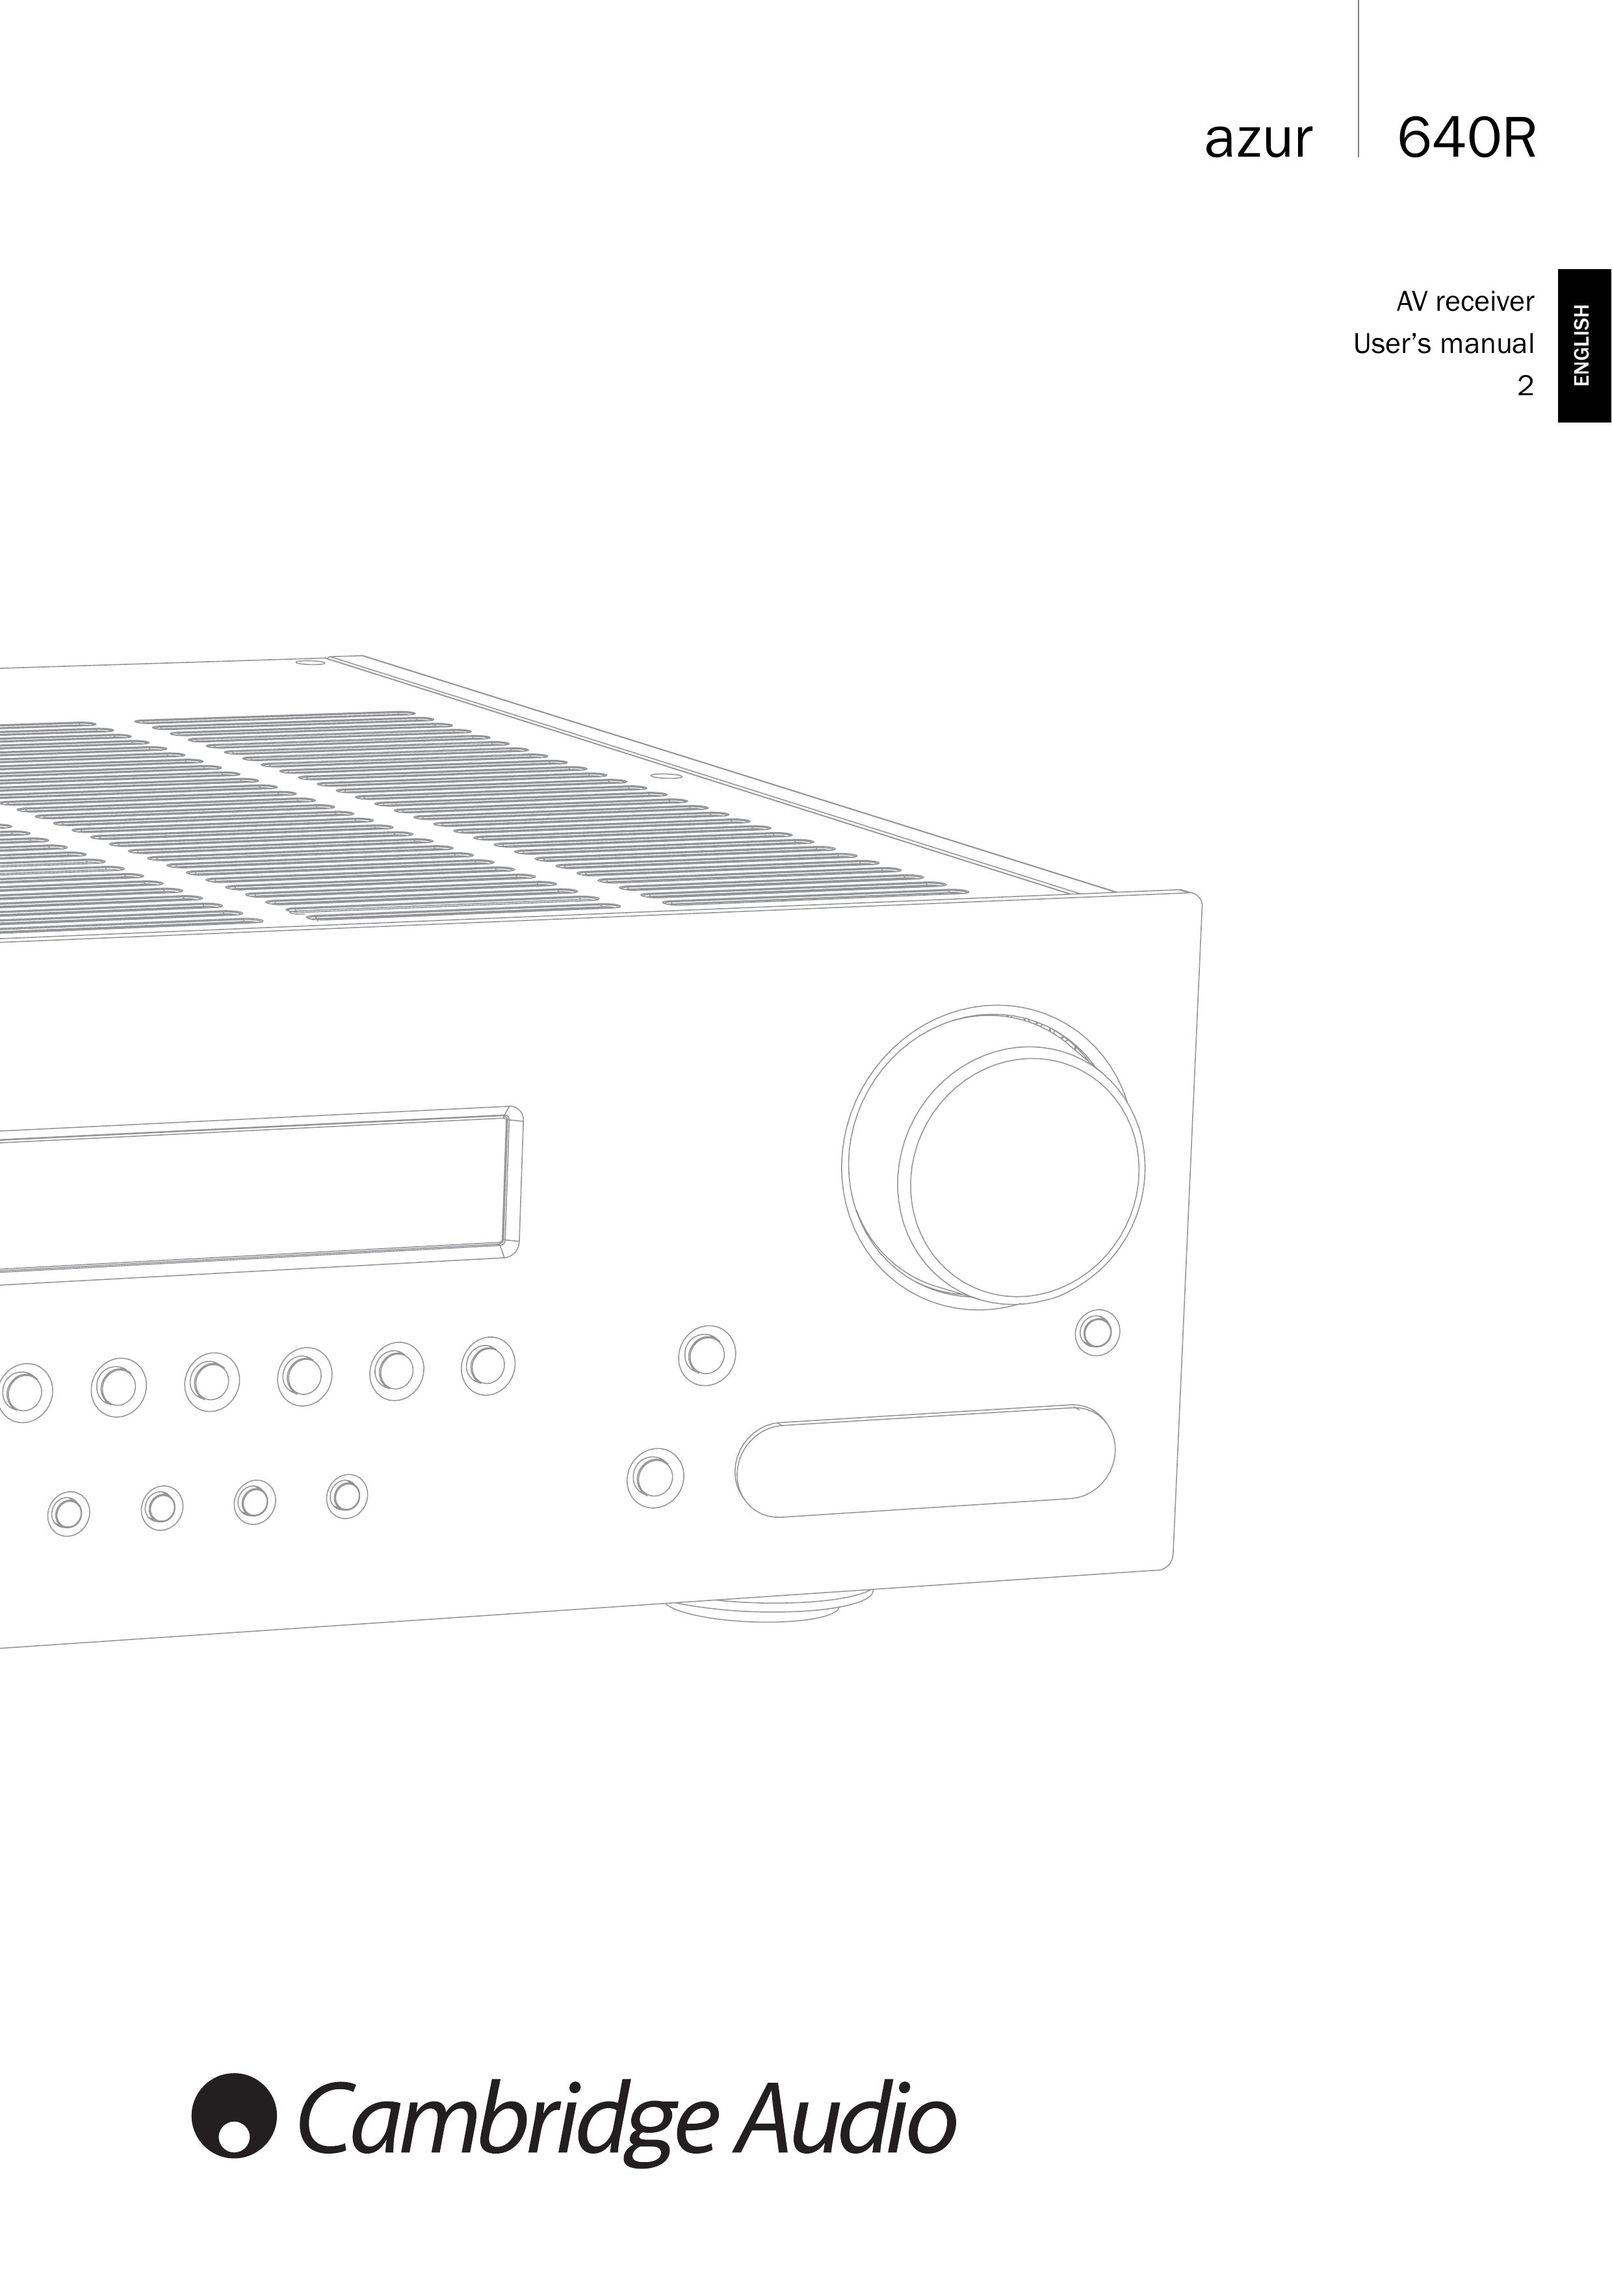 Cambridge Audio 640Razur Stereo Receiver User Manual